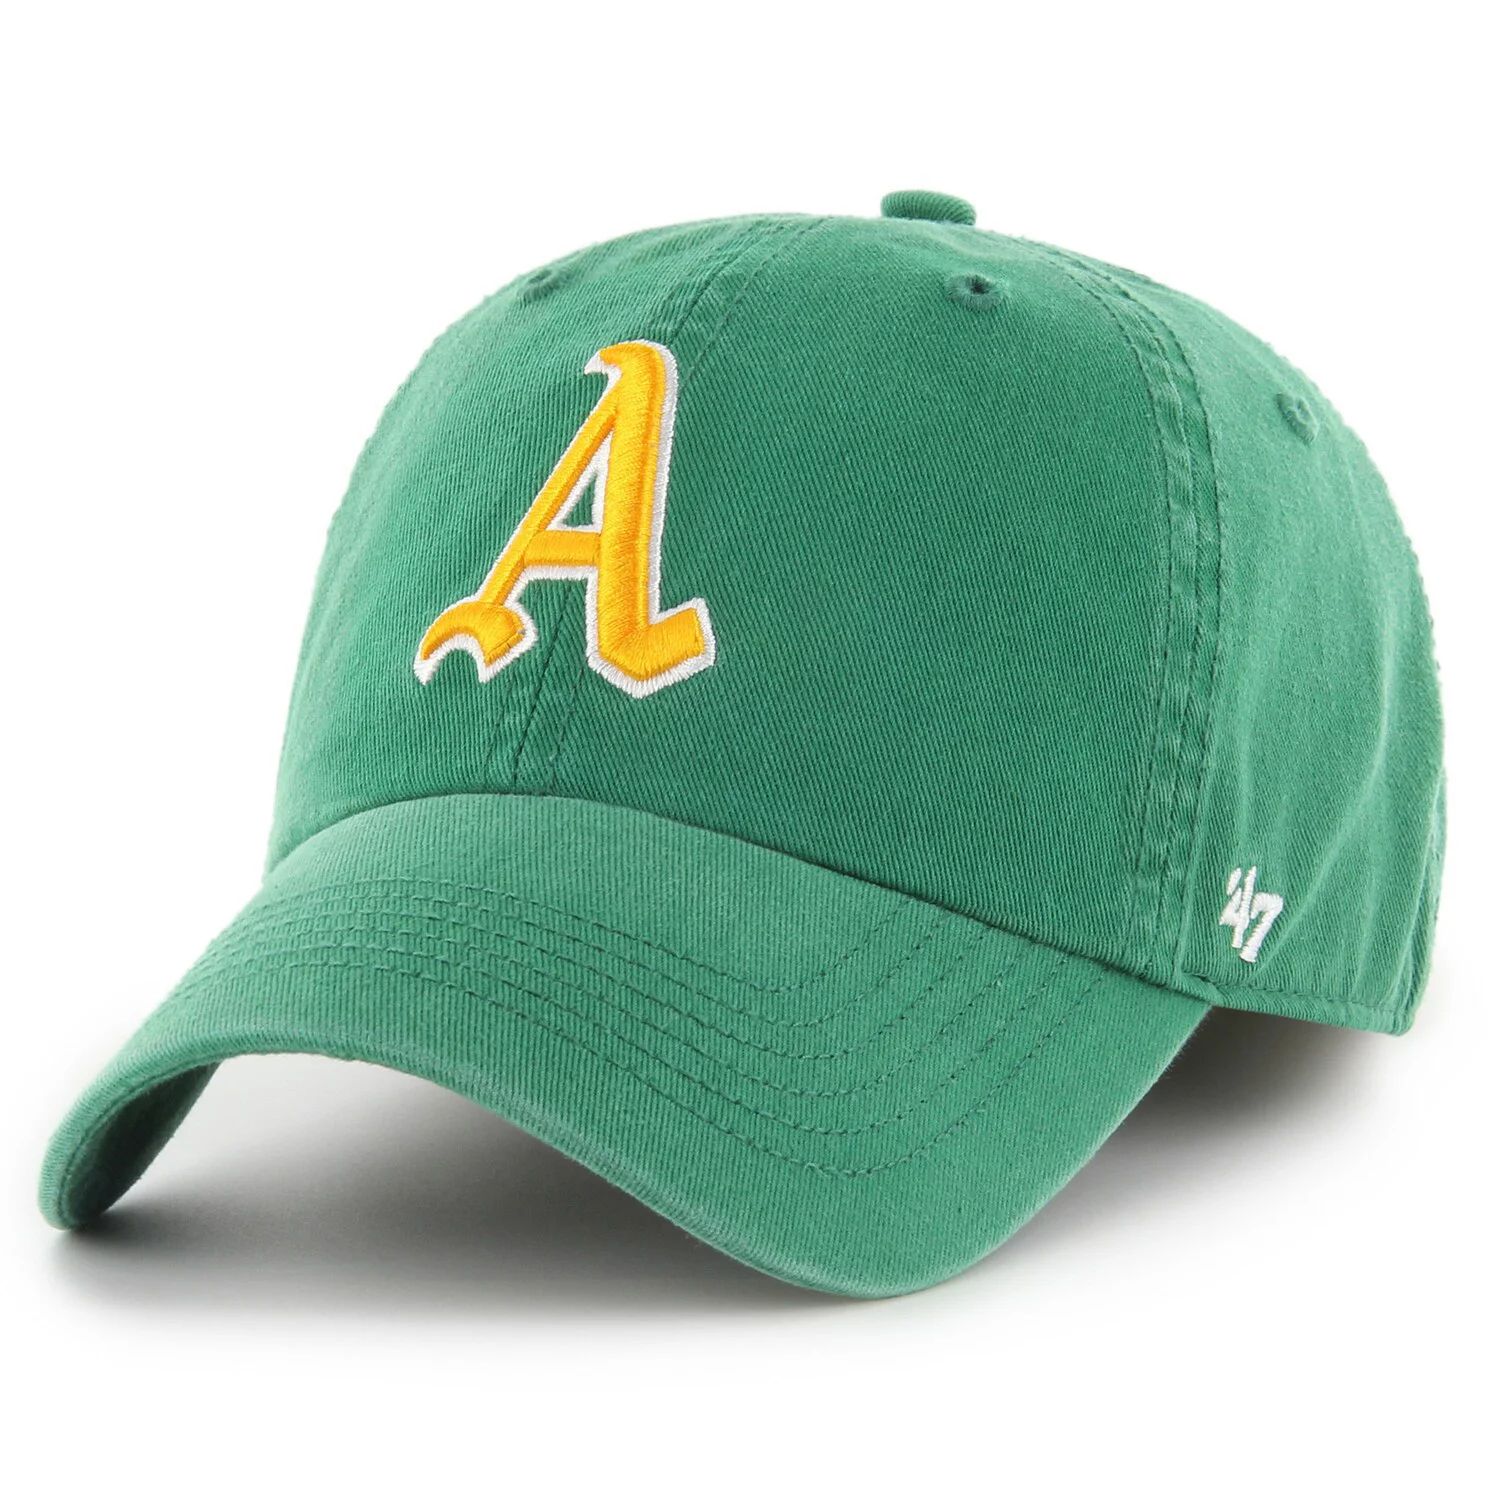 Мужская приталенная шляпа Green Oakland Athletics Cooperstown Collection '47, франшиза